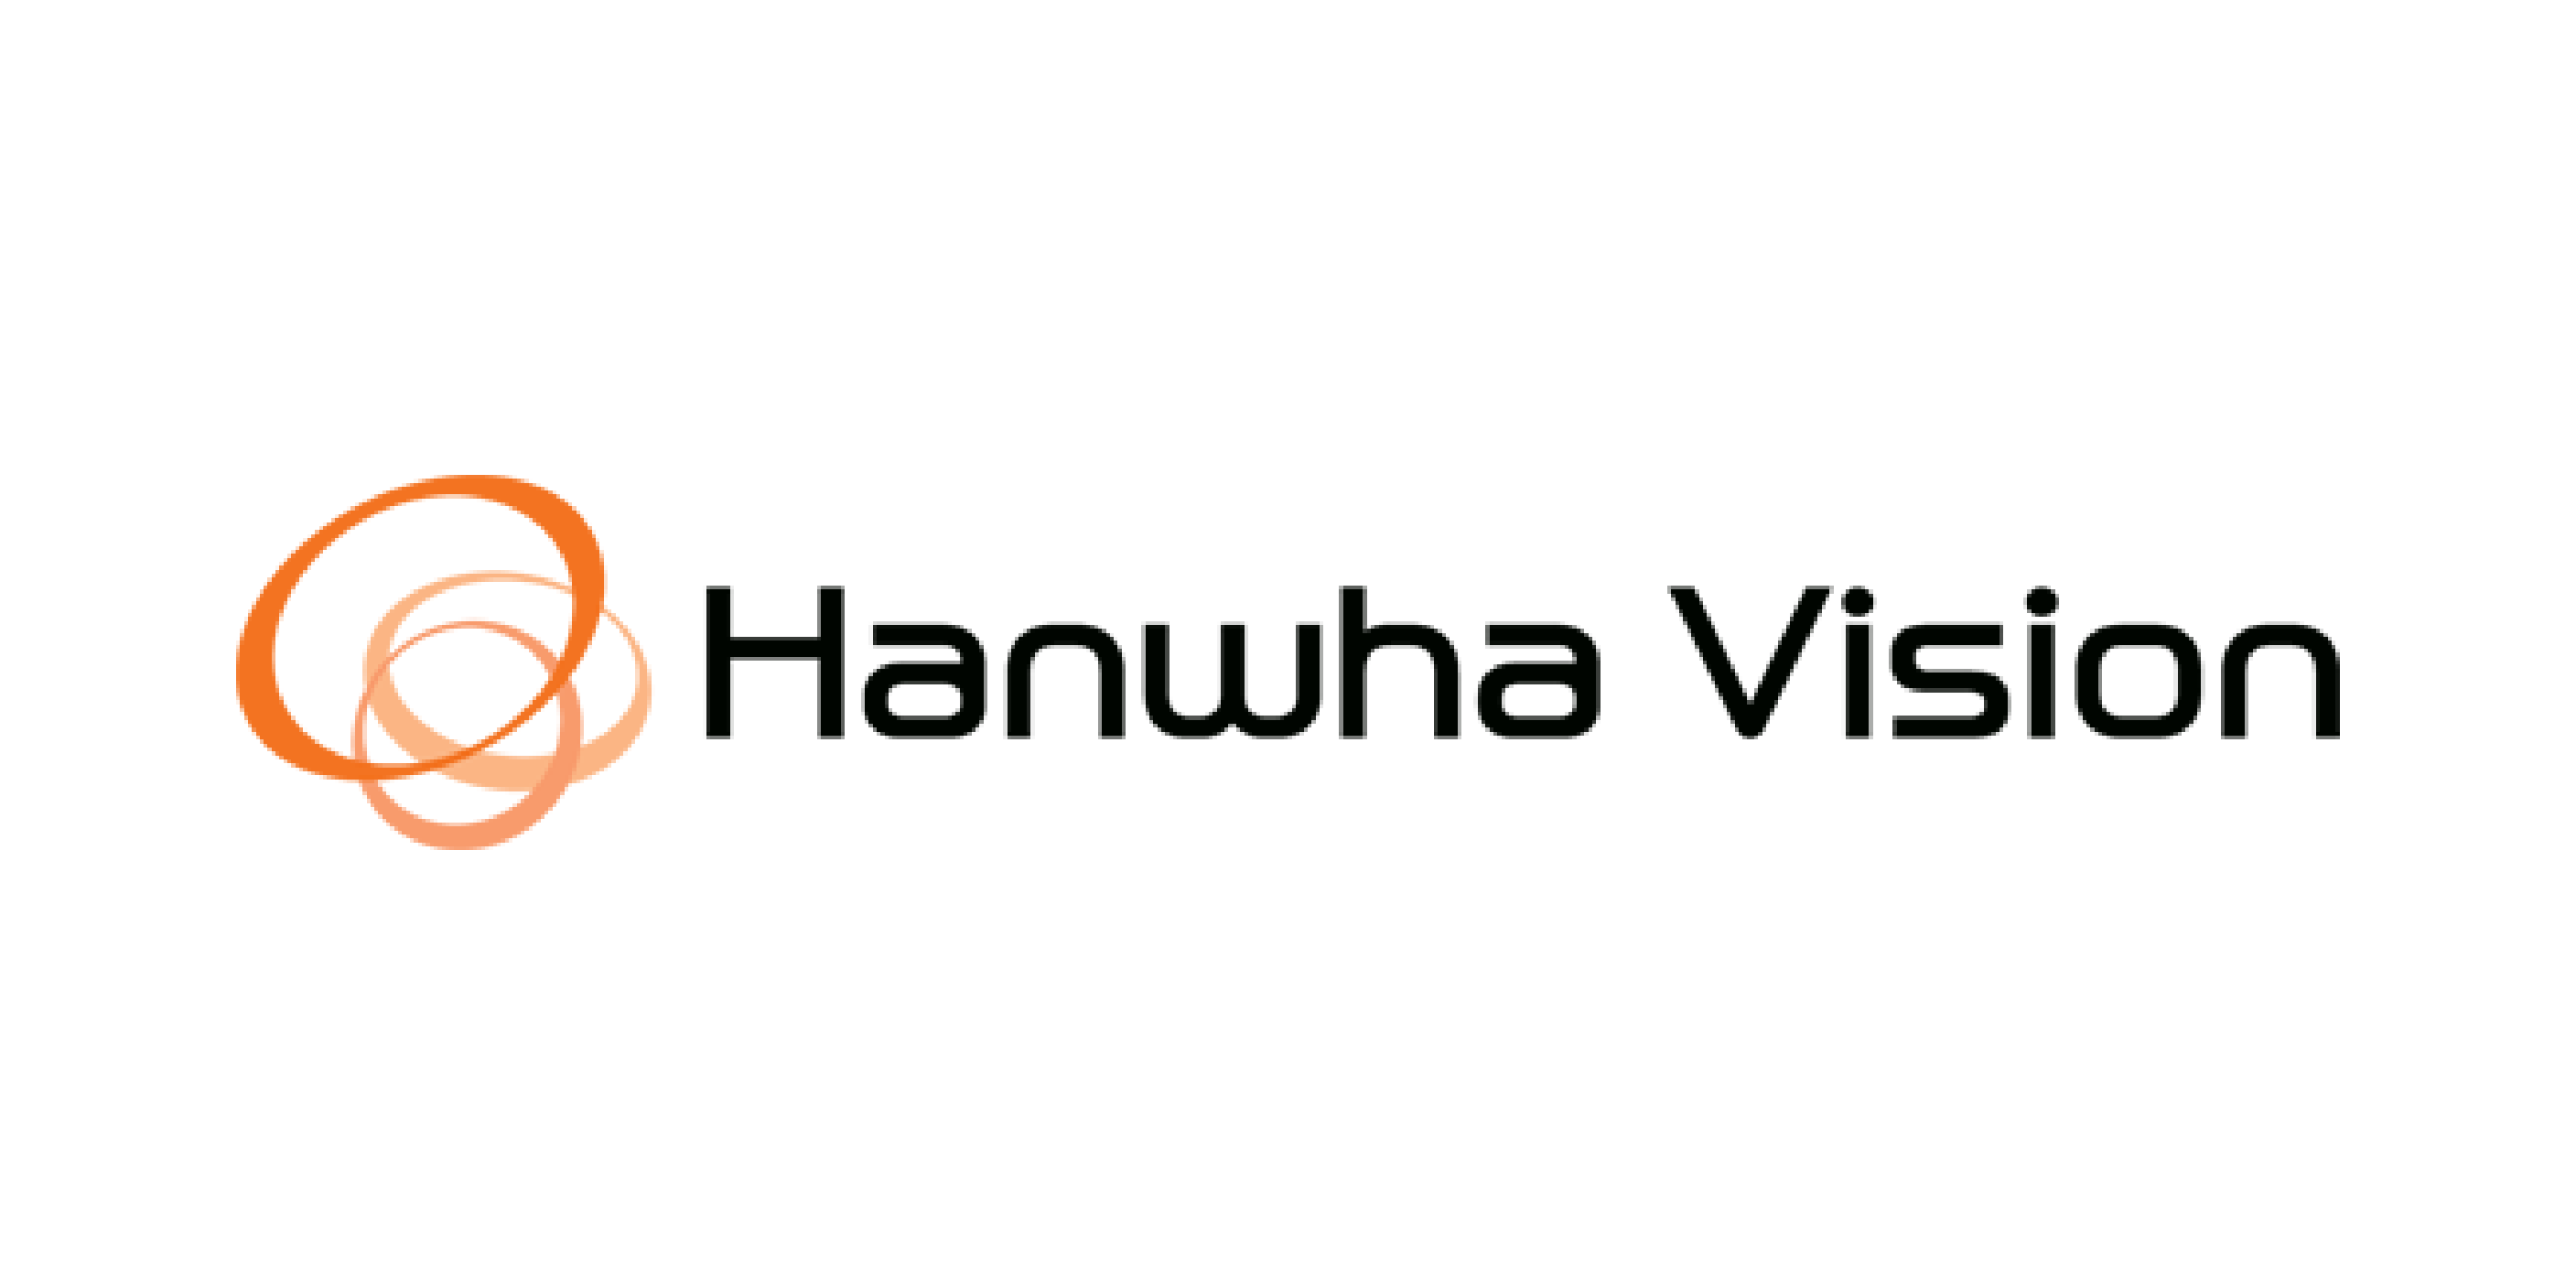 hanwha vision logo